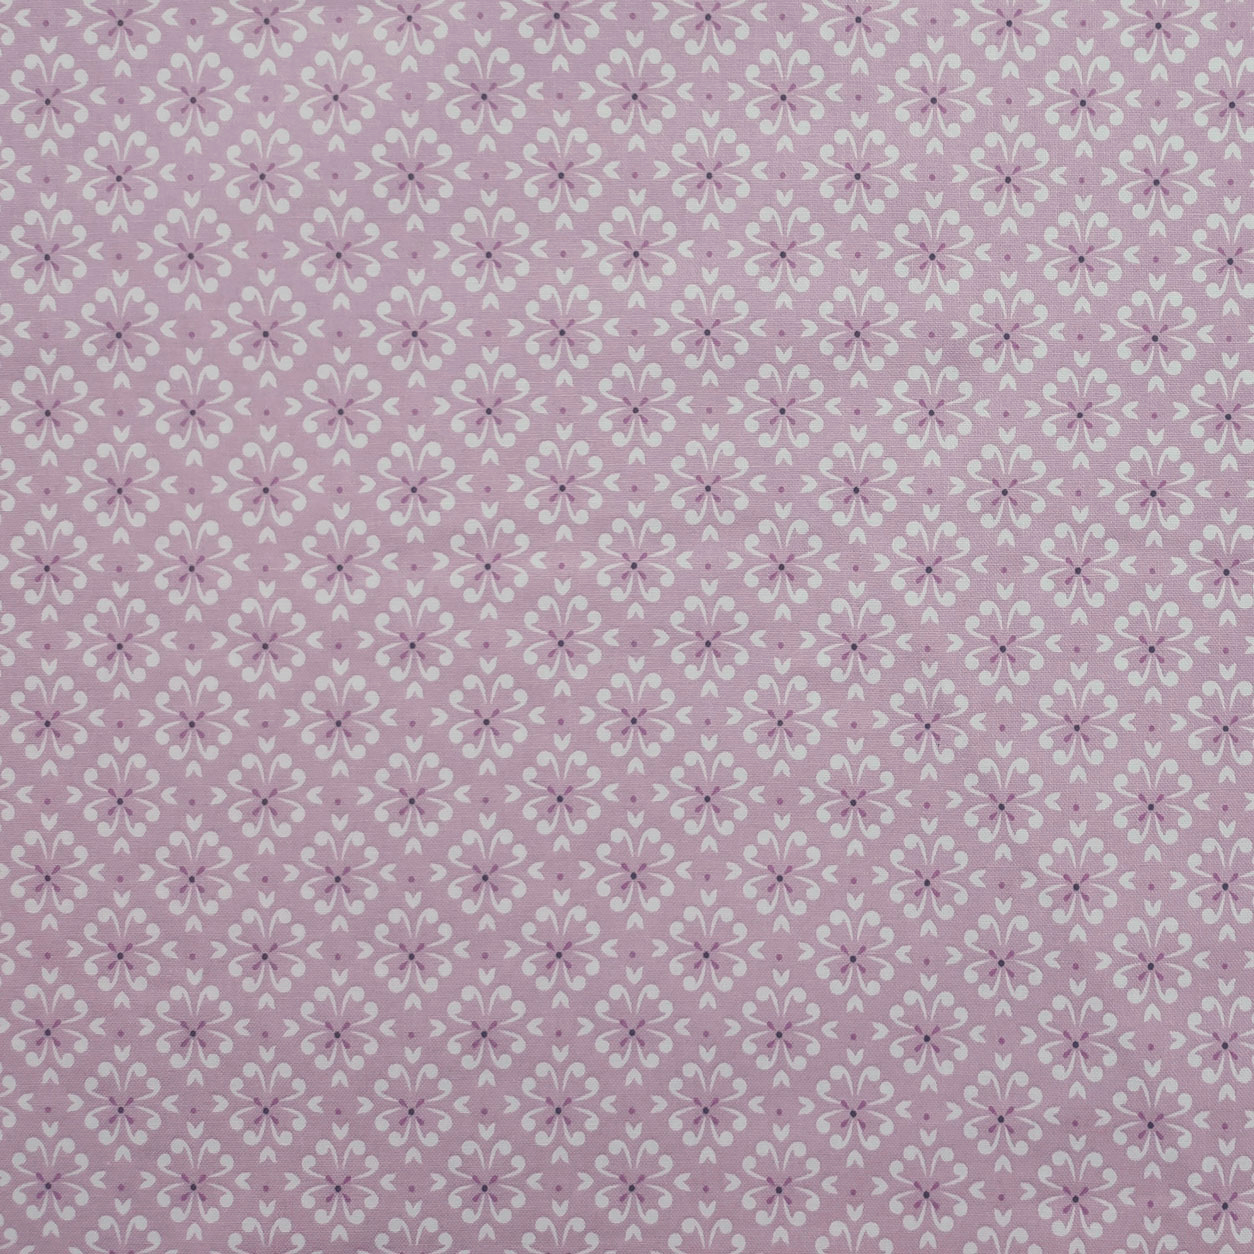 Cotone tessuto arredo gutermann fantasia geometrica floreale lilla